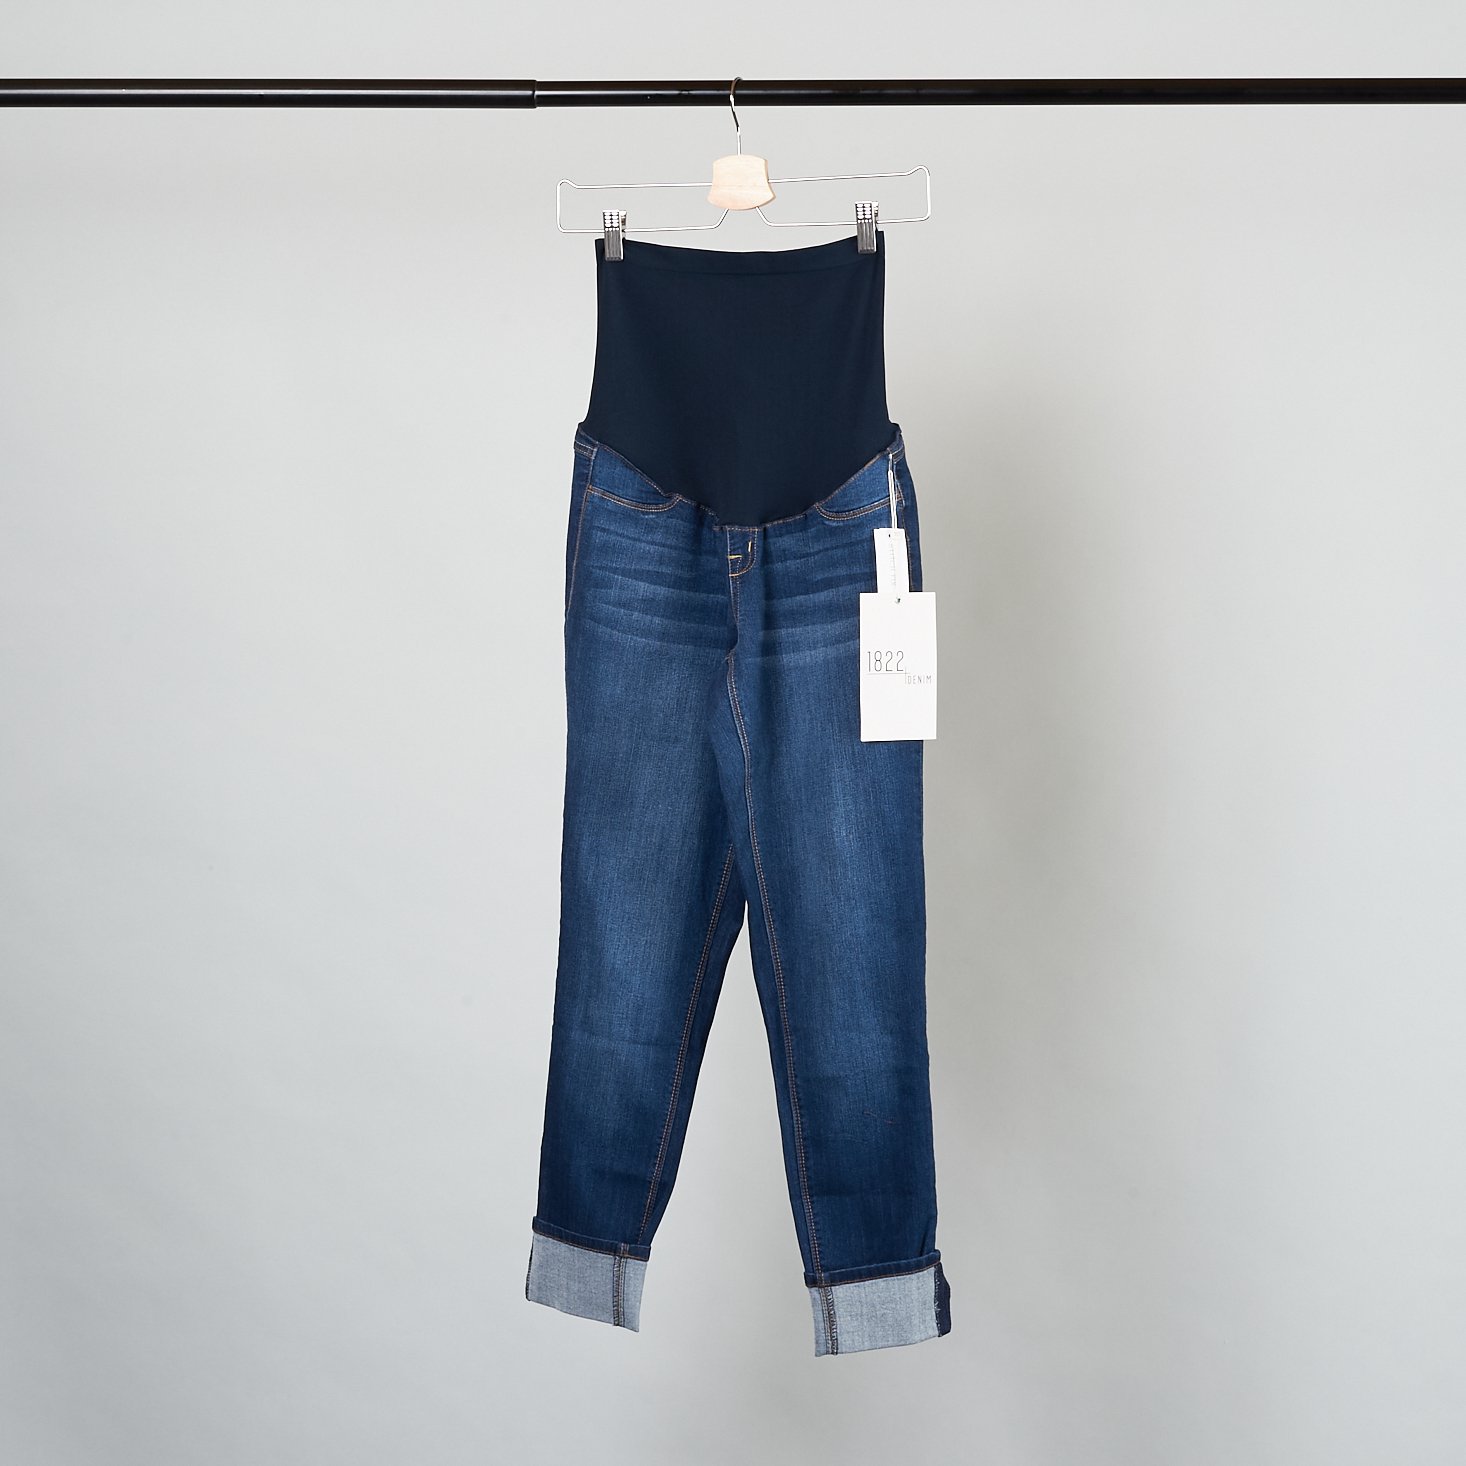 Stitch Fix Maternity jeans